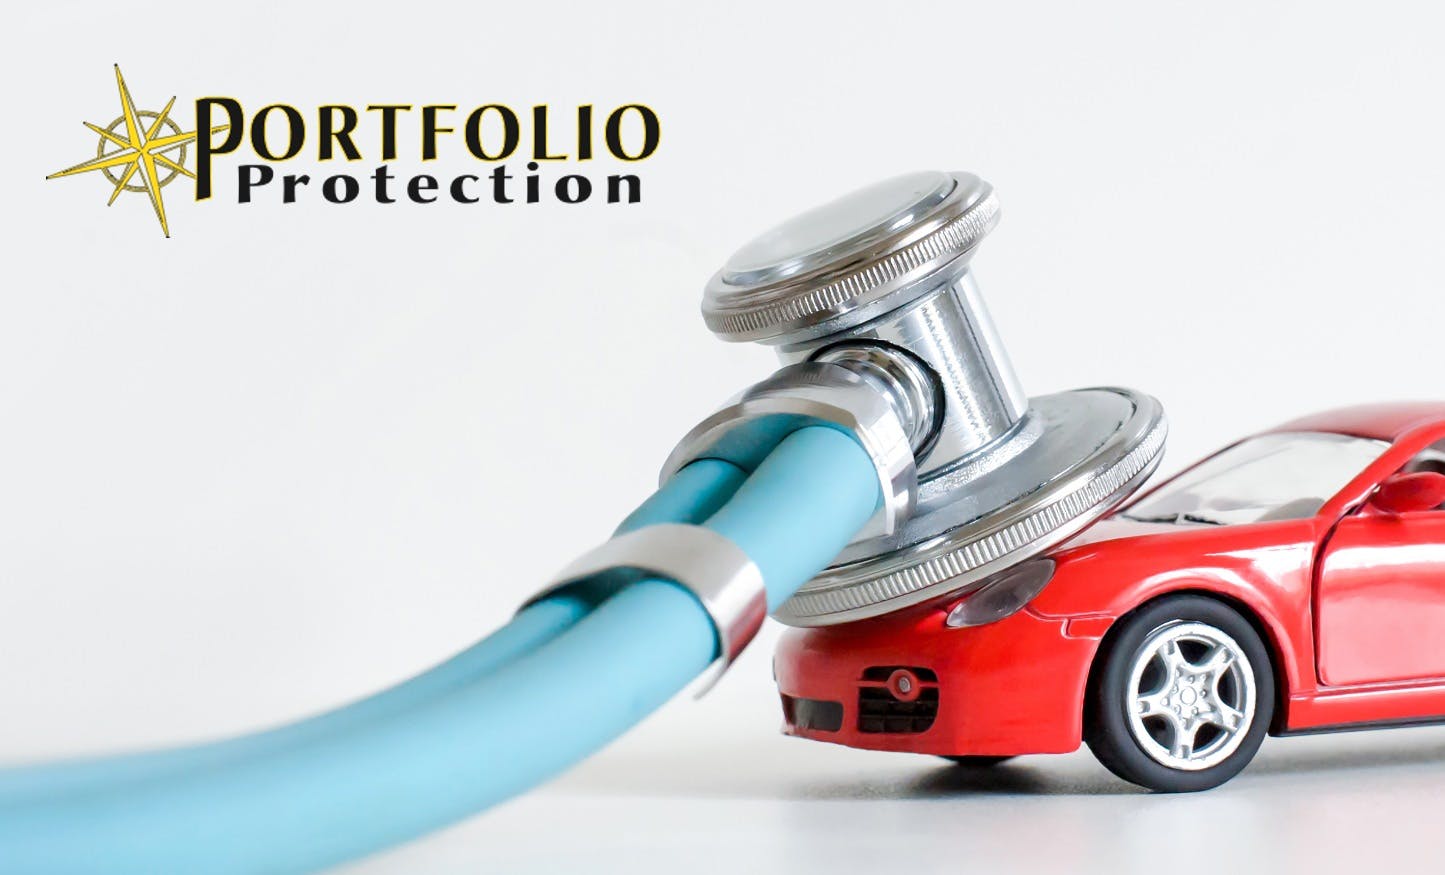 Portfolio Protection: Asset & Theft Protection